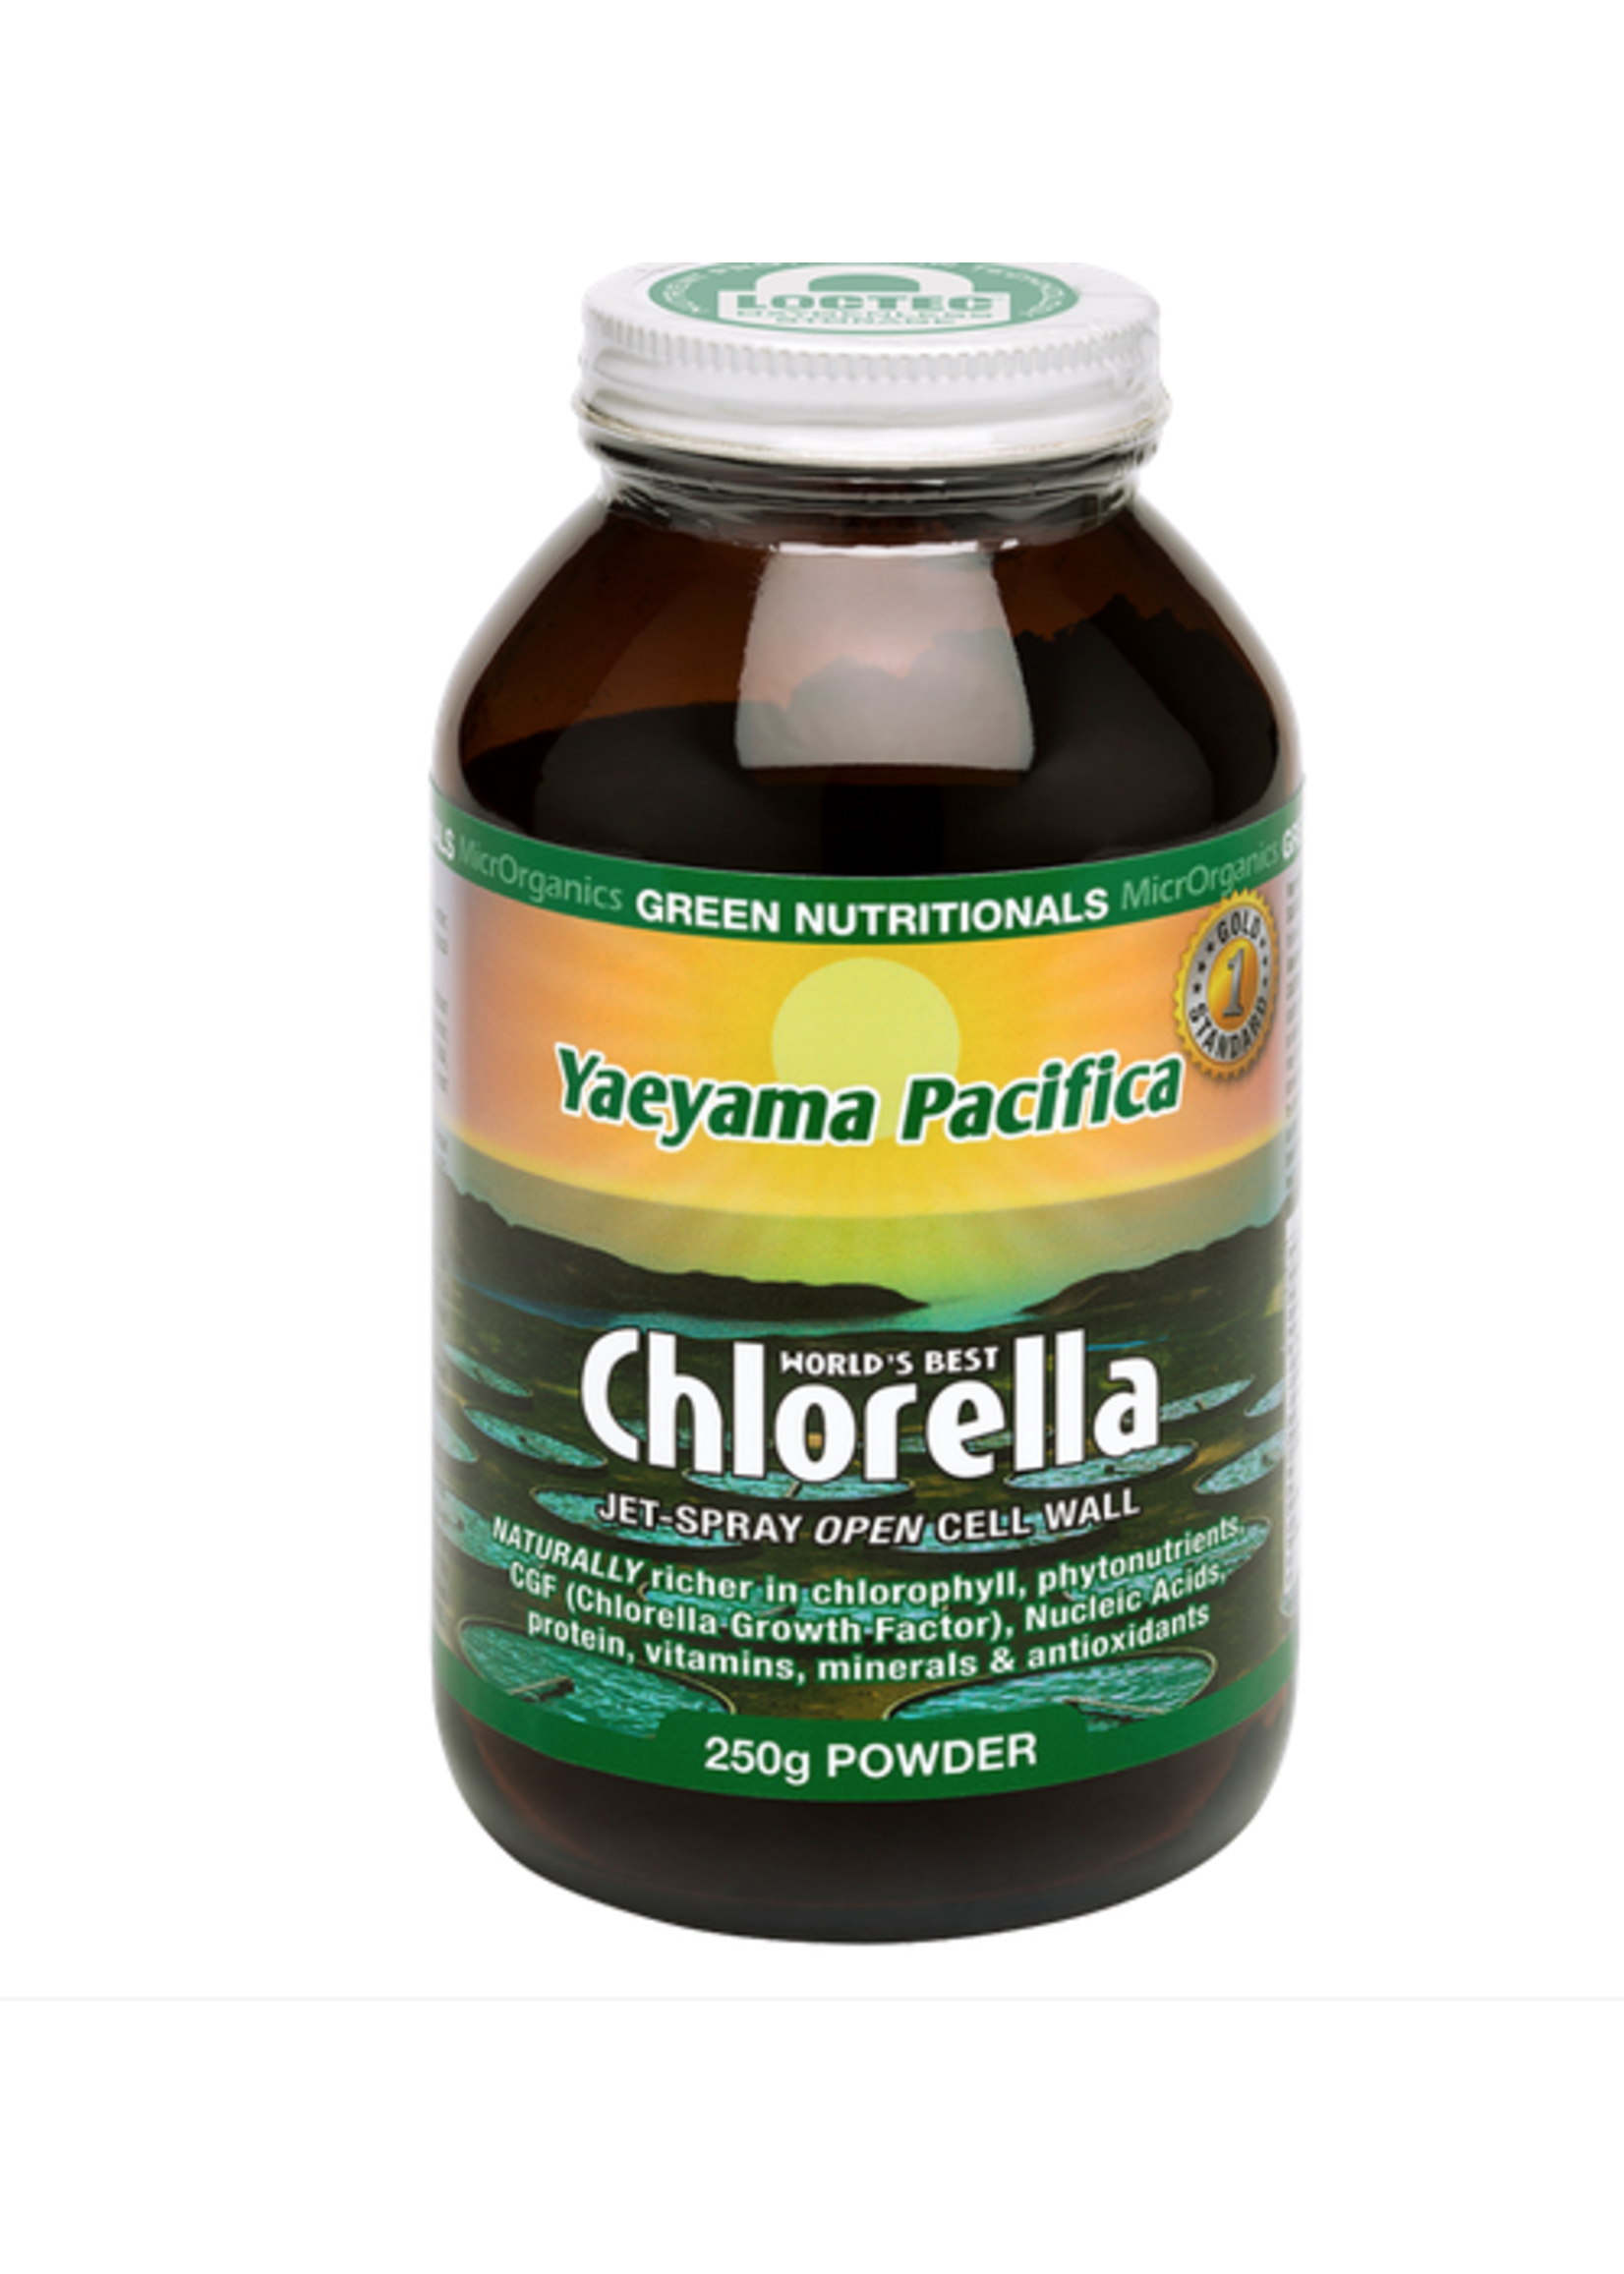 Green Nutritionals Yaeyama Pacifica Chlorella powder 250g